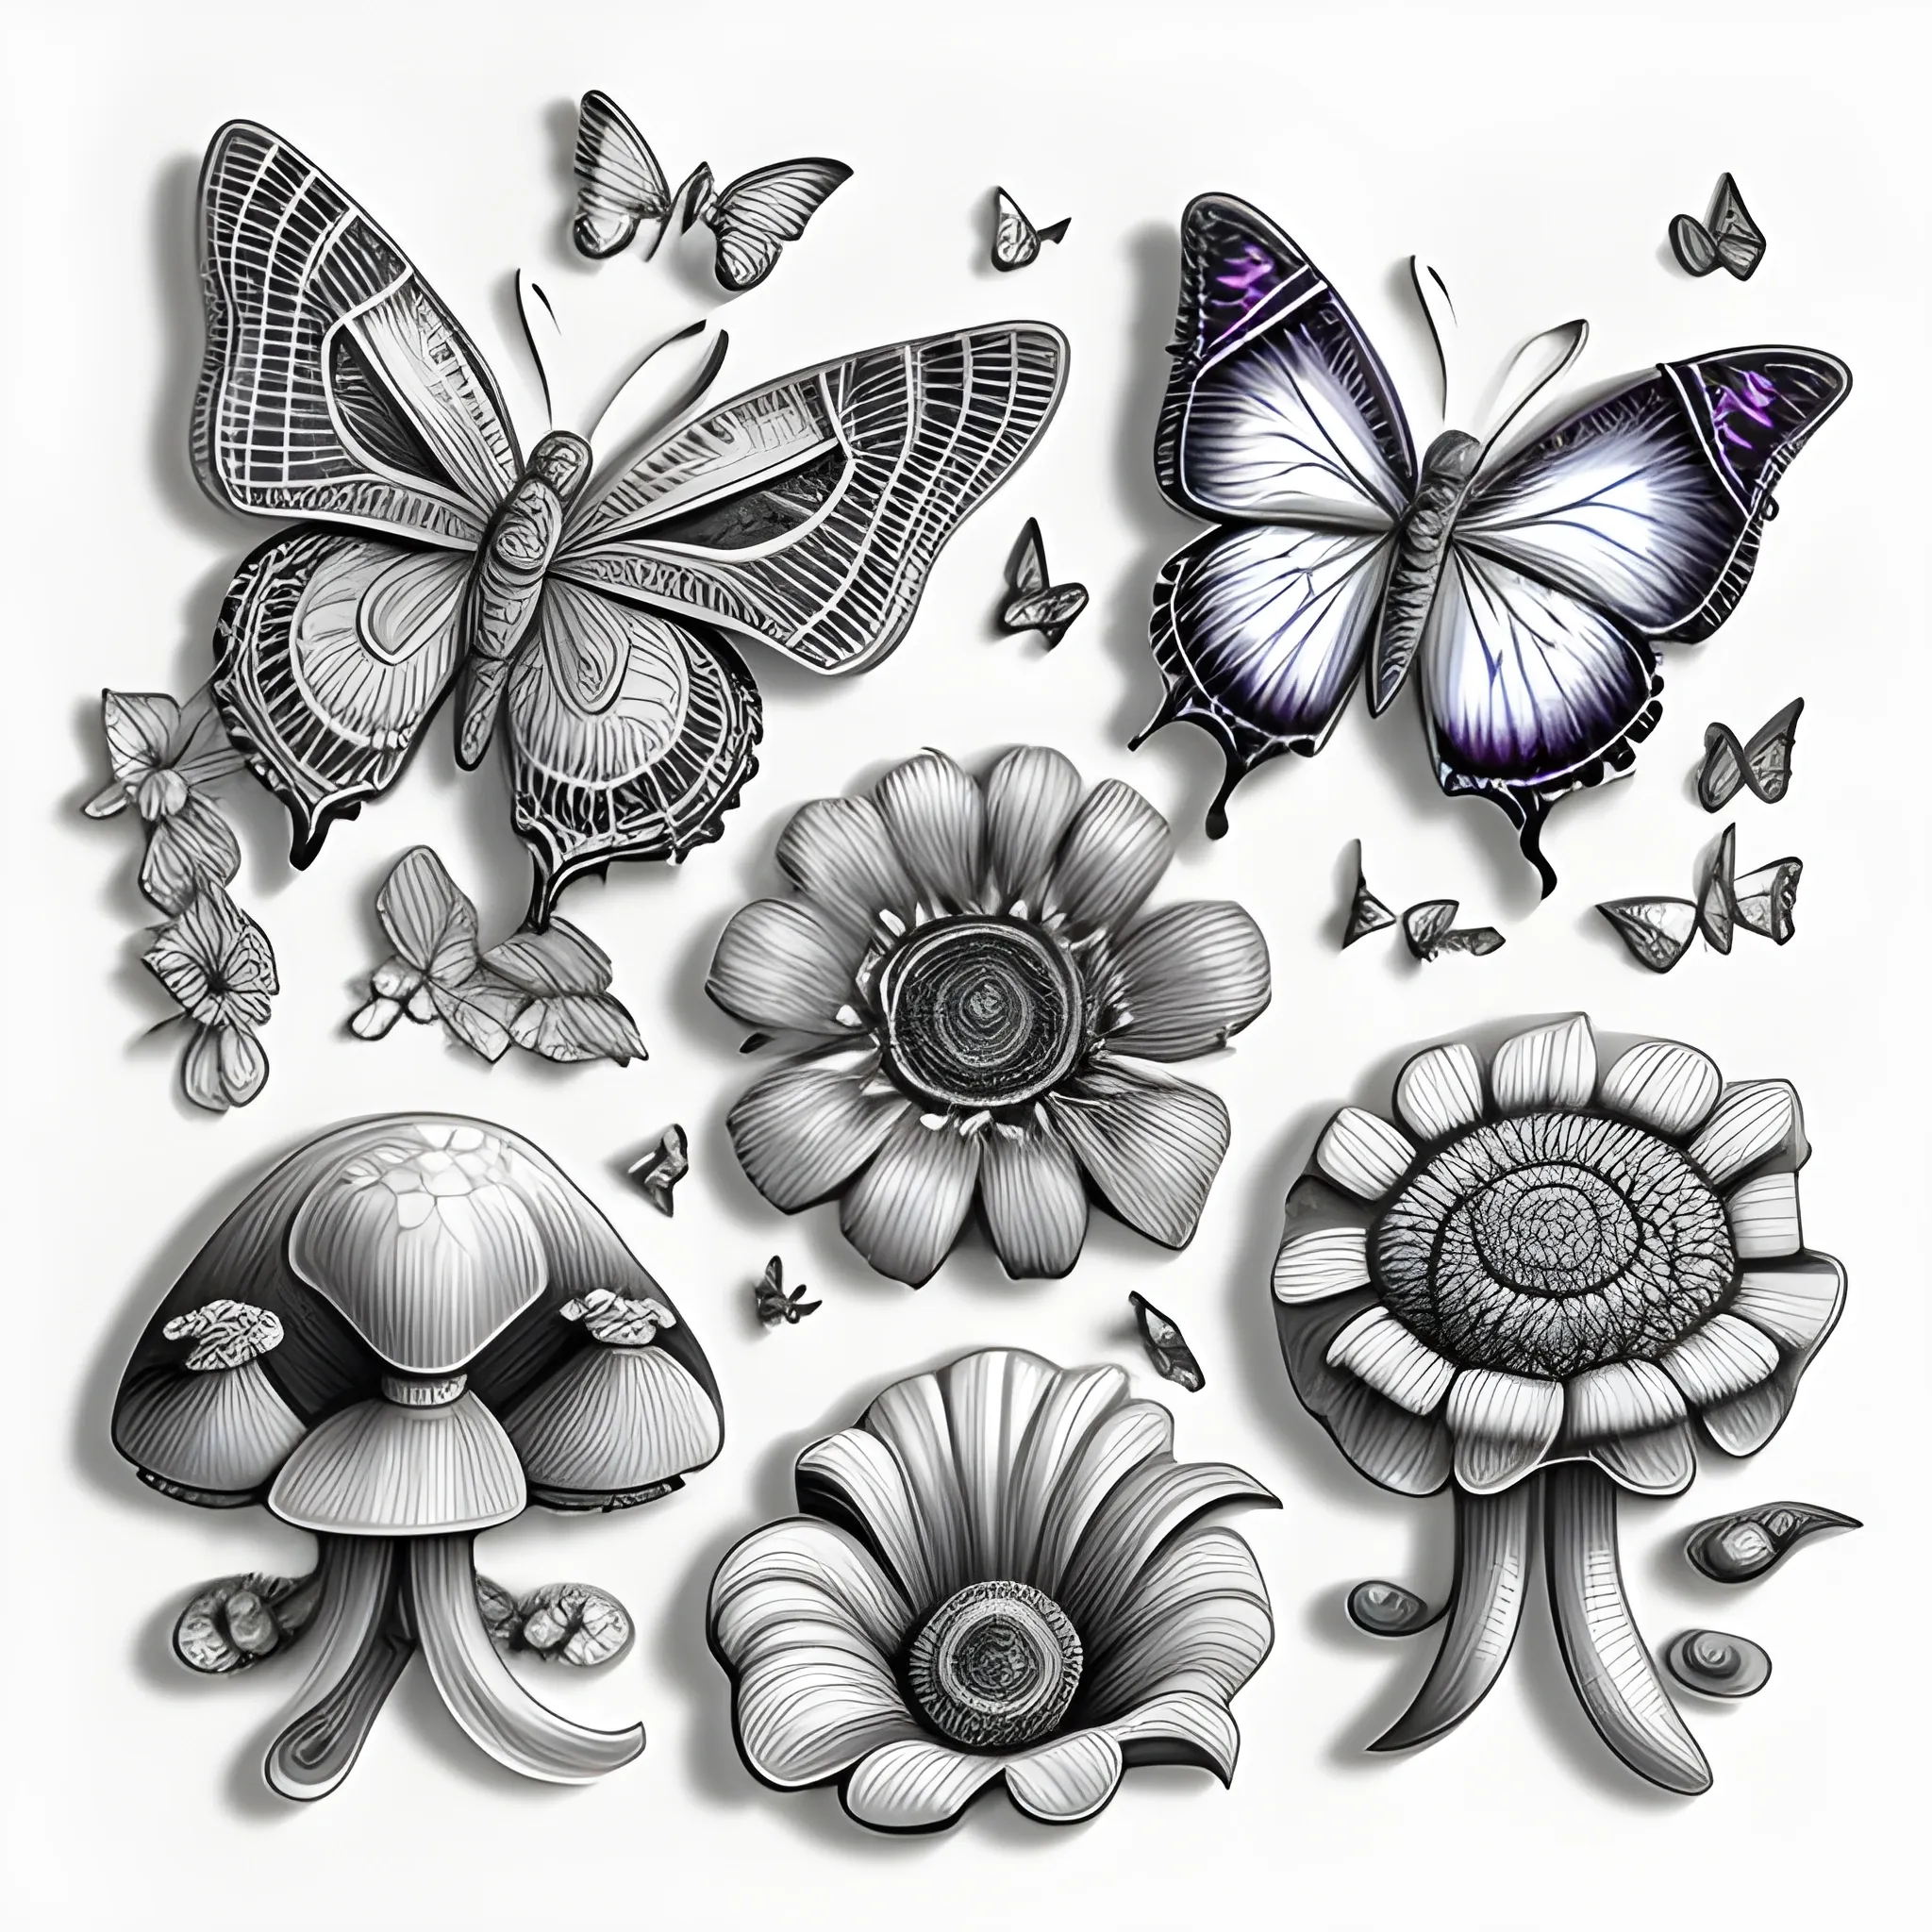 Sloth flowers butterflies mushrooms, Trippy, 3D, Pencil Sketch